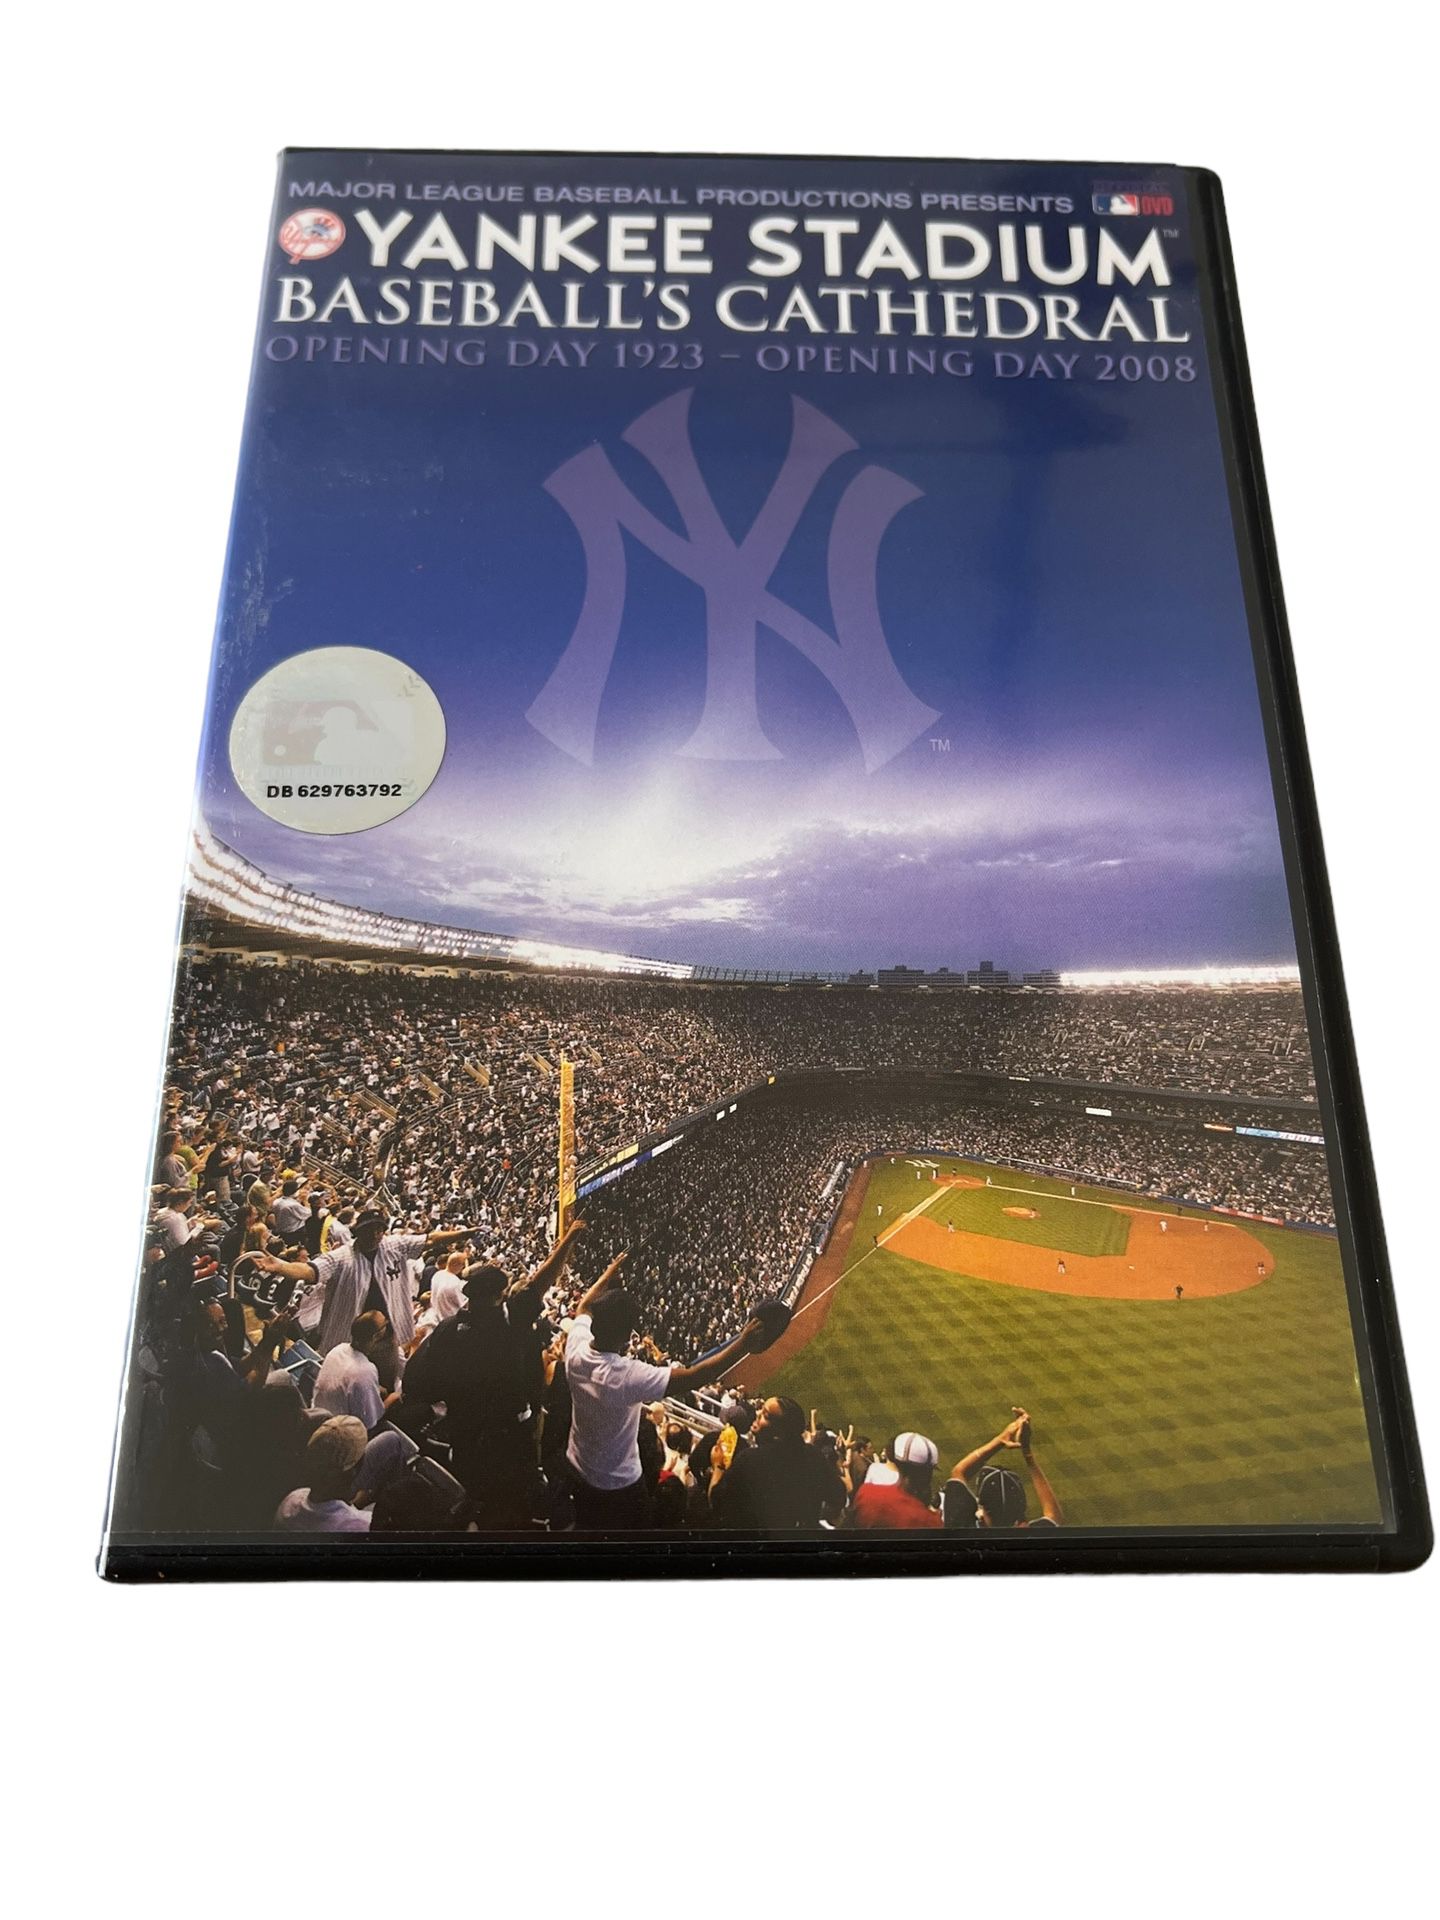 MLB Yankee Stadium: Baseballs Cathedral (DVD, 2008, 2-Disc Set)  This two-disc set captures the essence of the iconic Yankee Stadium, showcasing its r